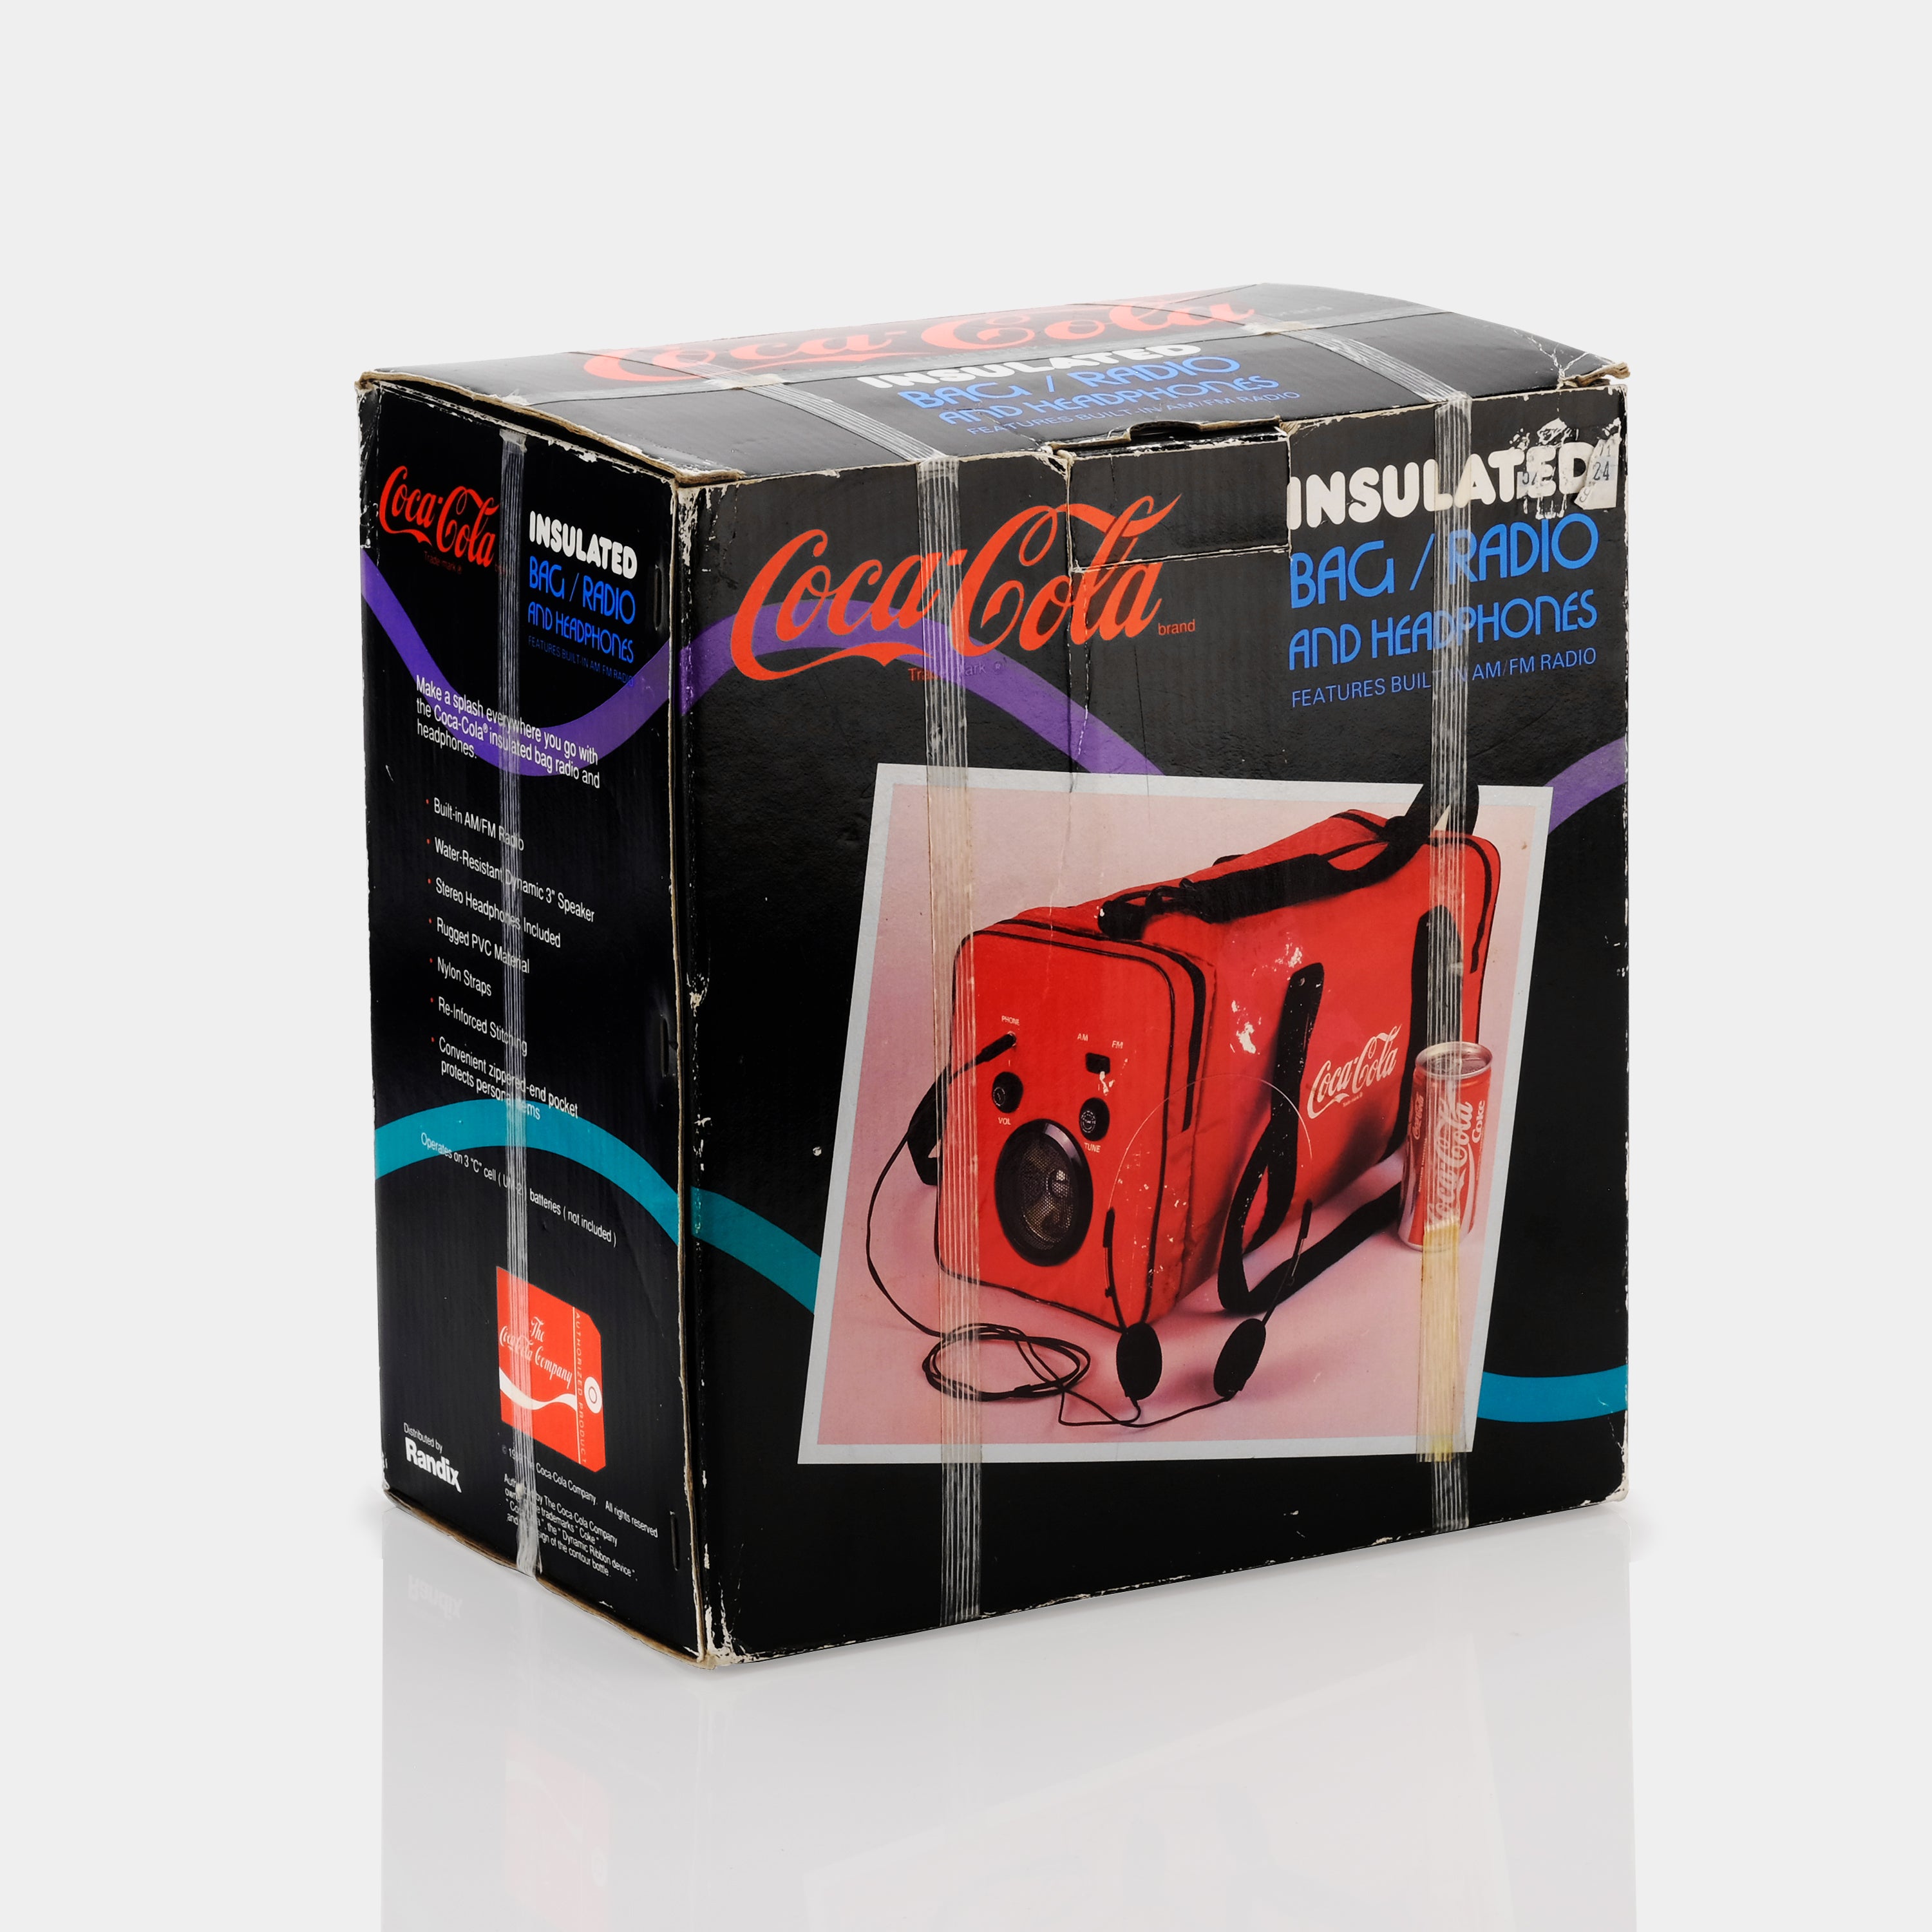 Vintage Randix Coca-Cola Sounds Cool Insulated Bag/Radio and Headphones